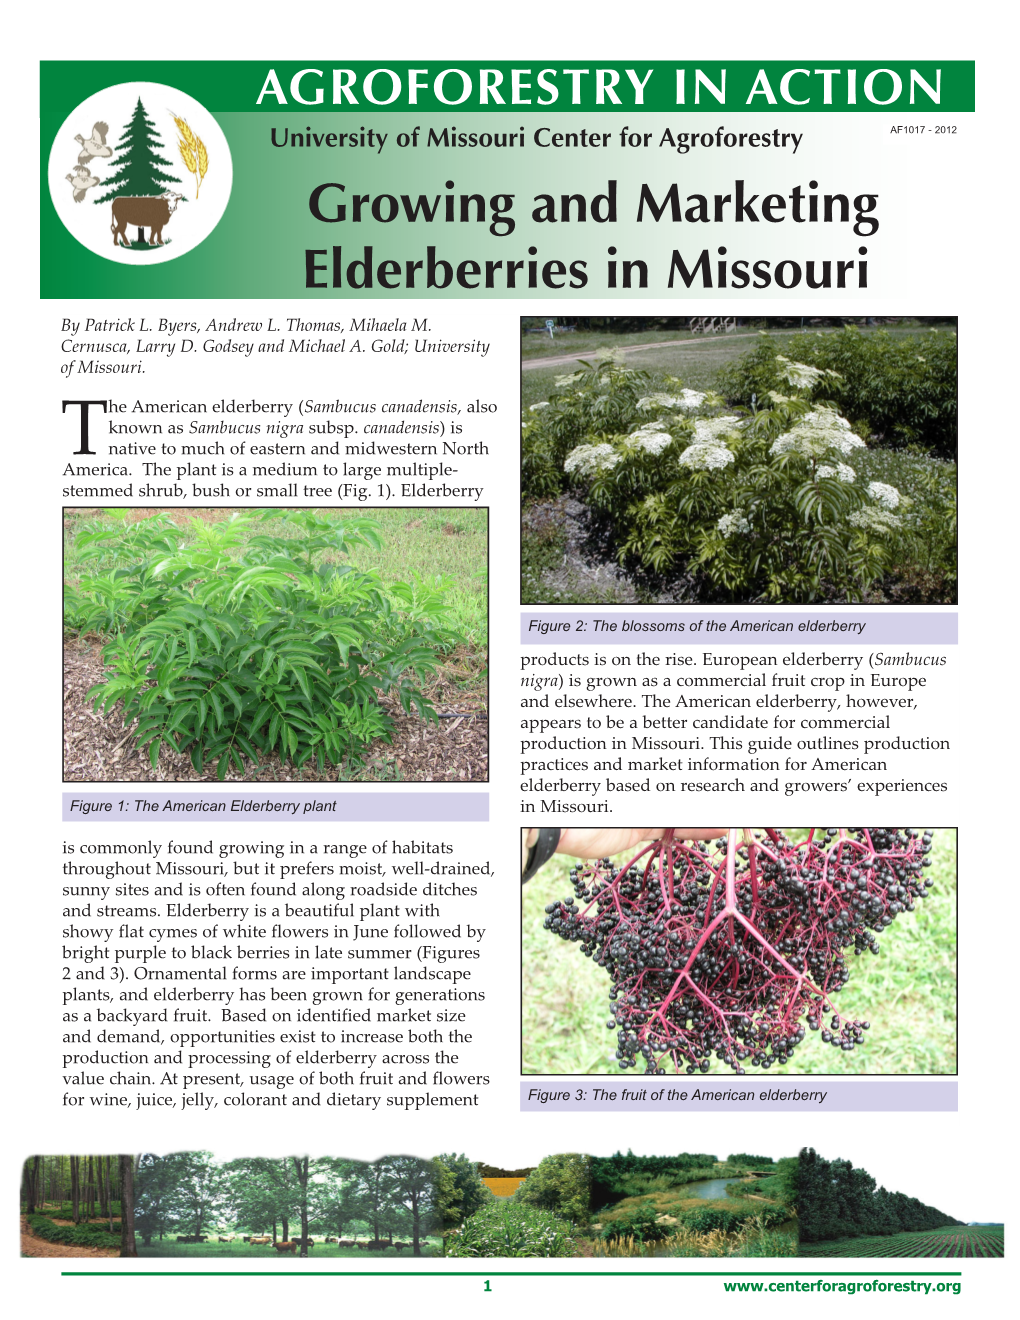 Growing and Marketing Elderberries in Missouri by Patrick L